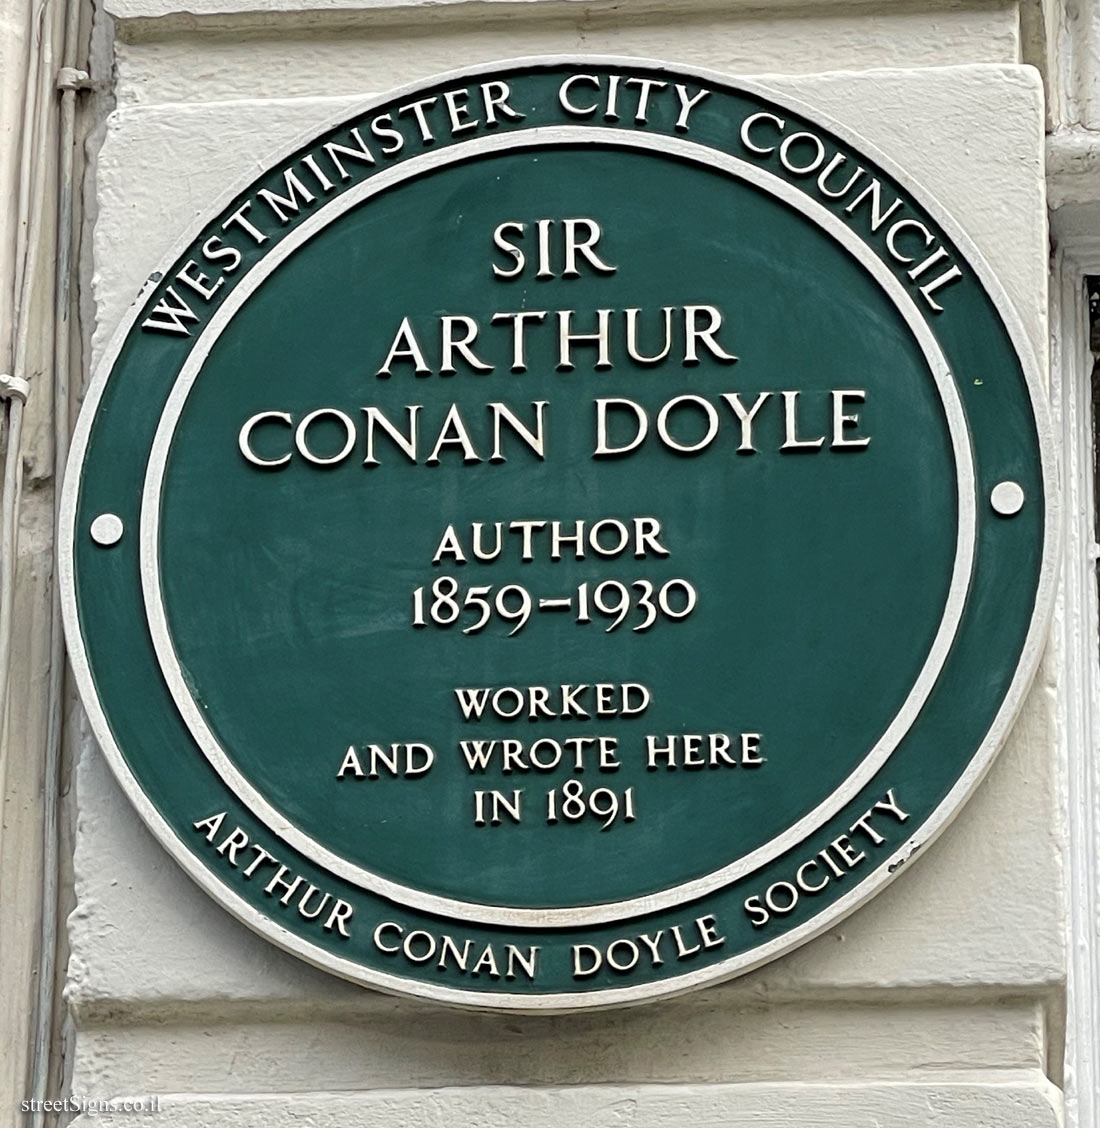 London - Commemorative plaque where Arthur Conan Doyle lived and wrote